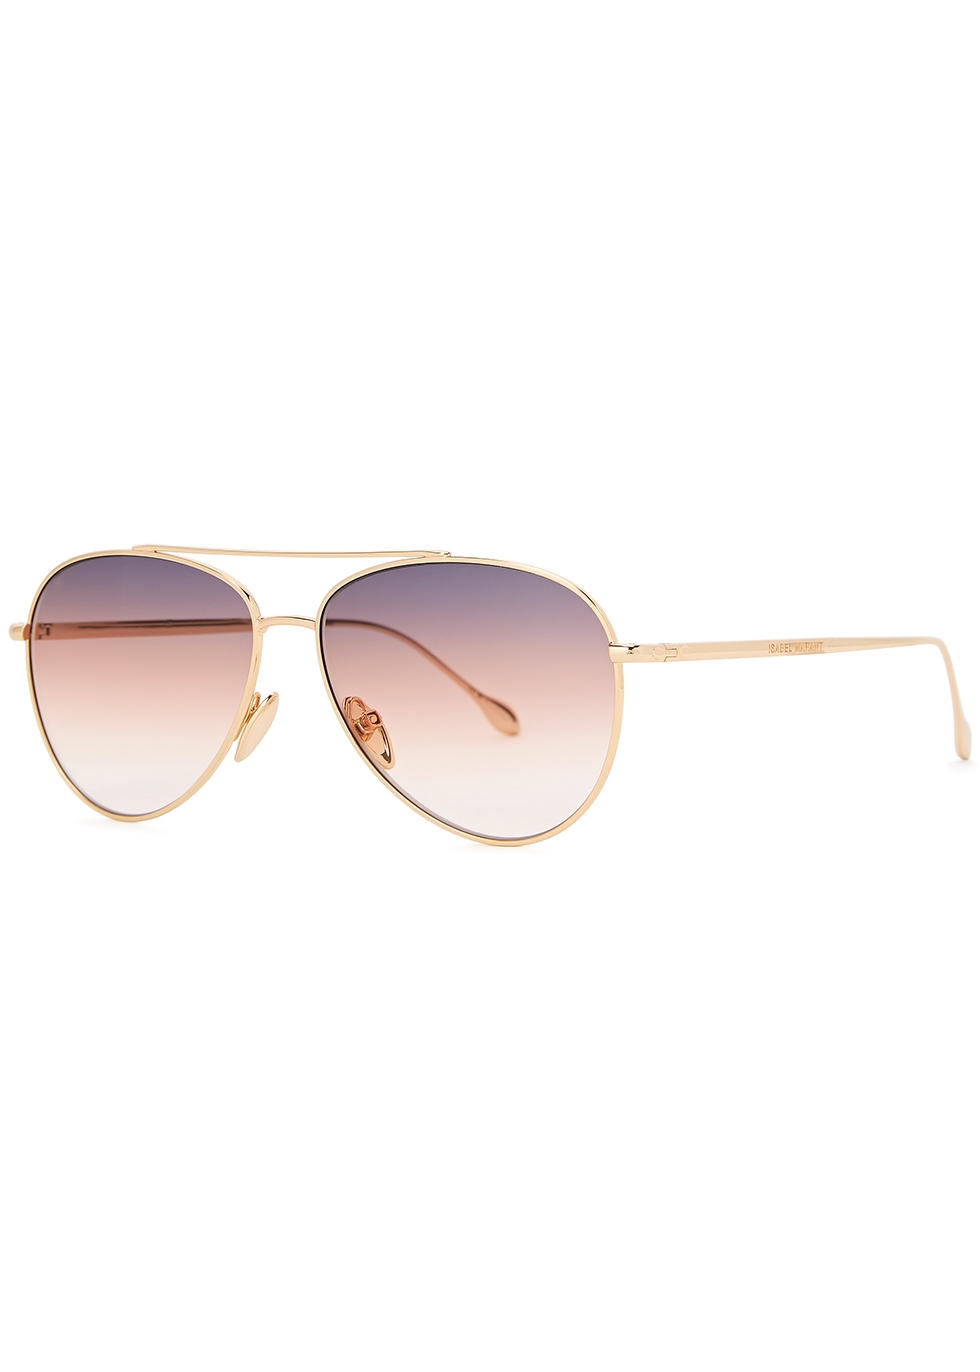 Isabel Marant Gold-tone aviator-style sunglasses - Harvey Nichols